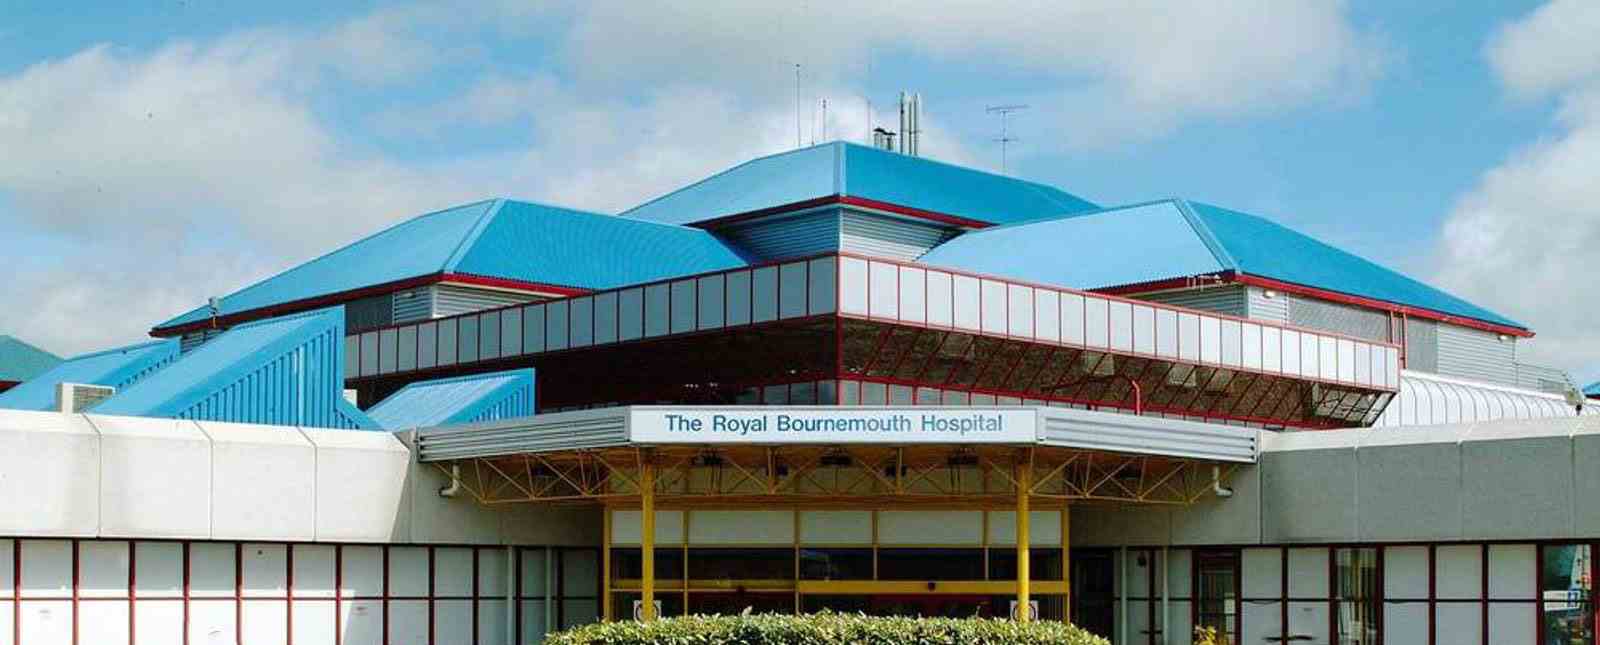 Royal Bournemouth Hospital 1 3557973)